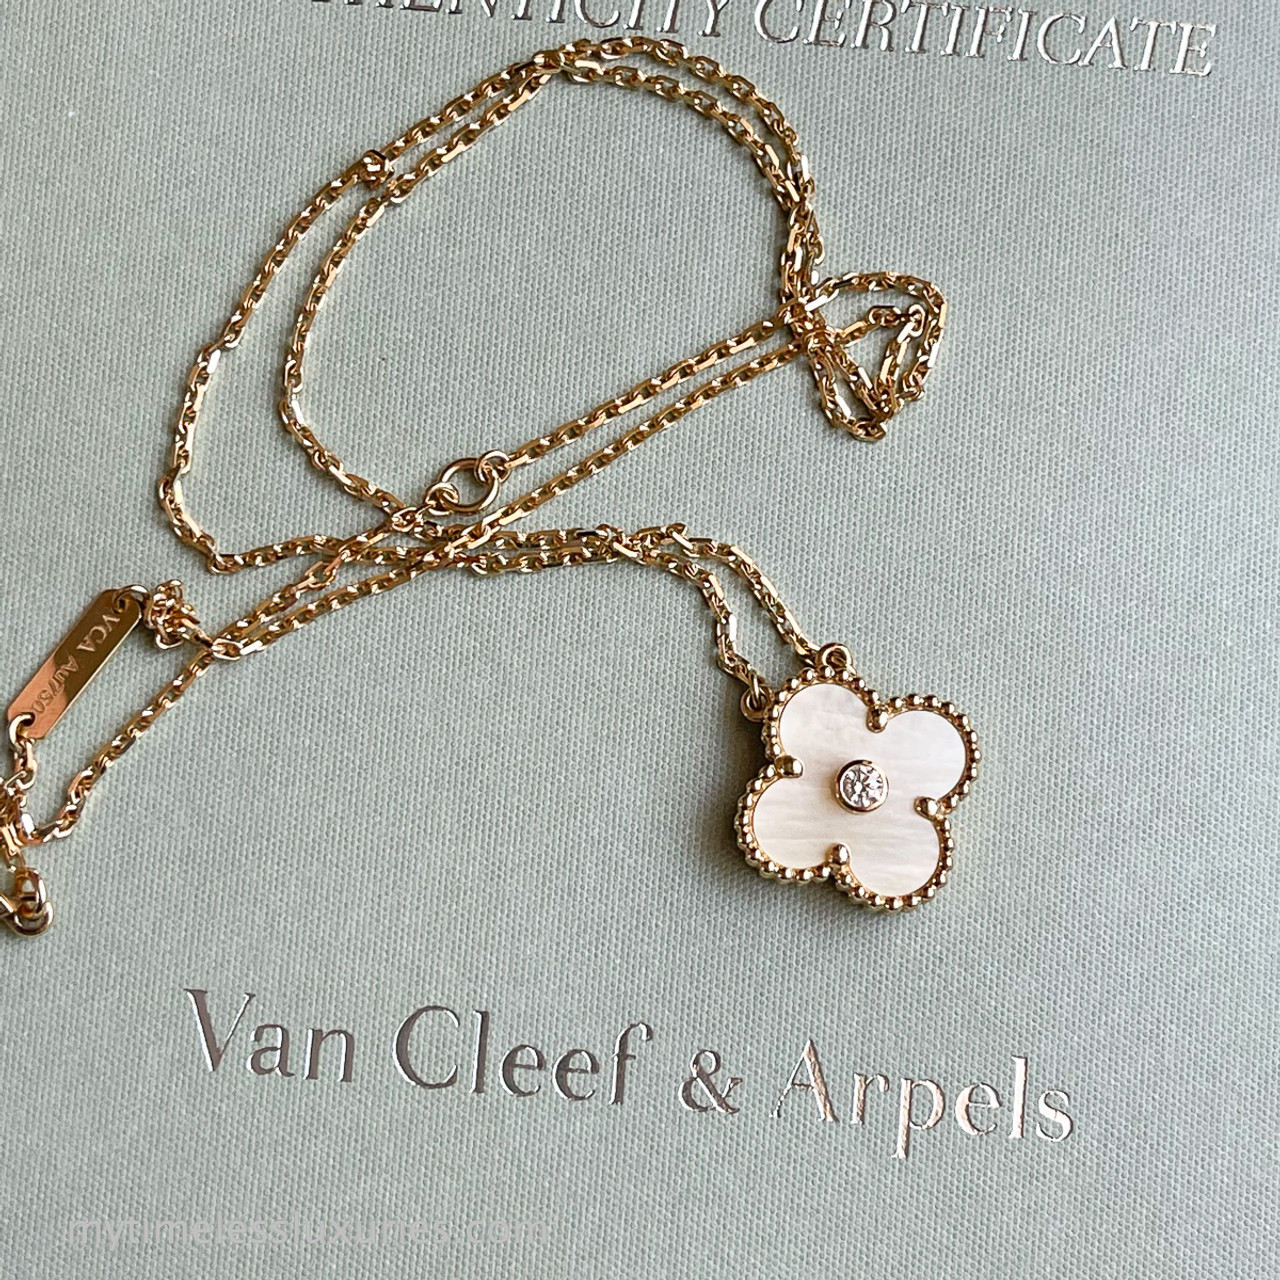 van cleef and arpels gold necklace